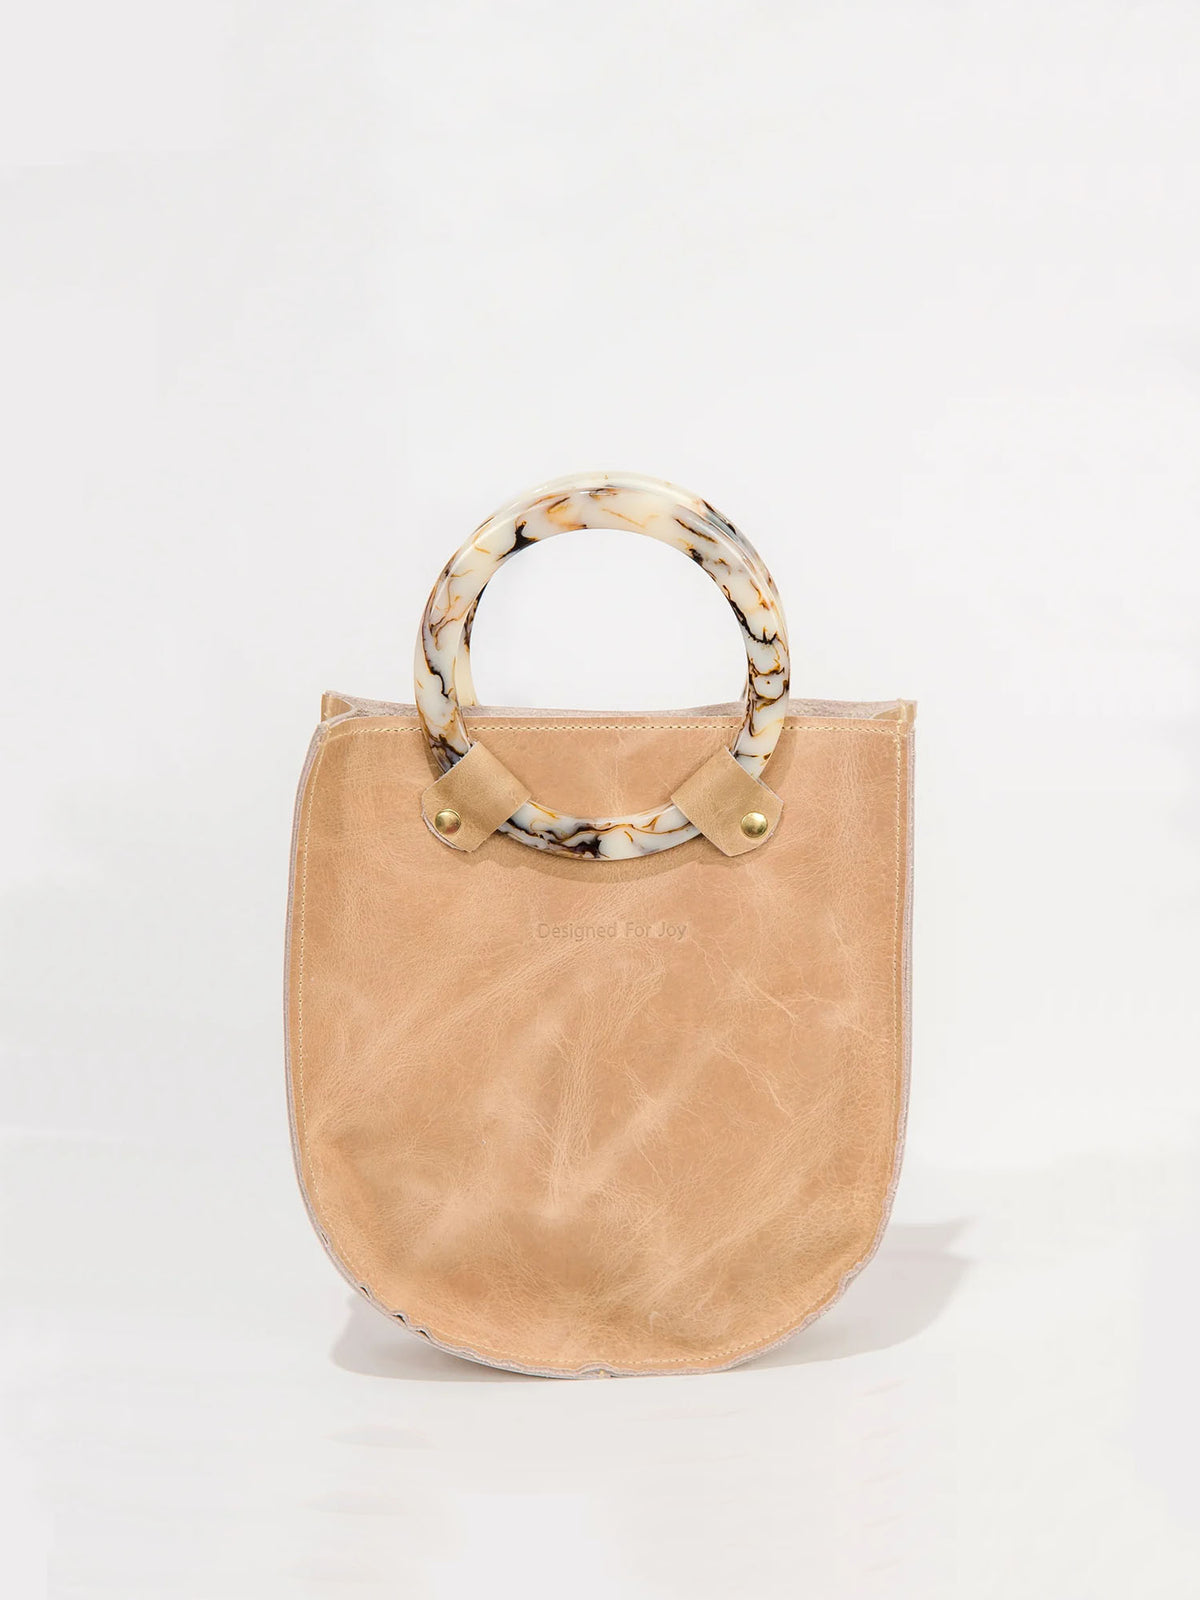 designed for joy lottie ring handle tote bag in tan